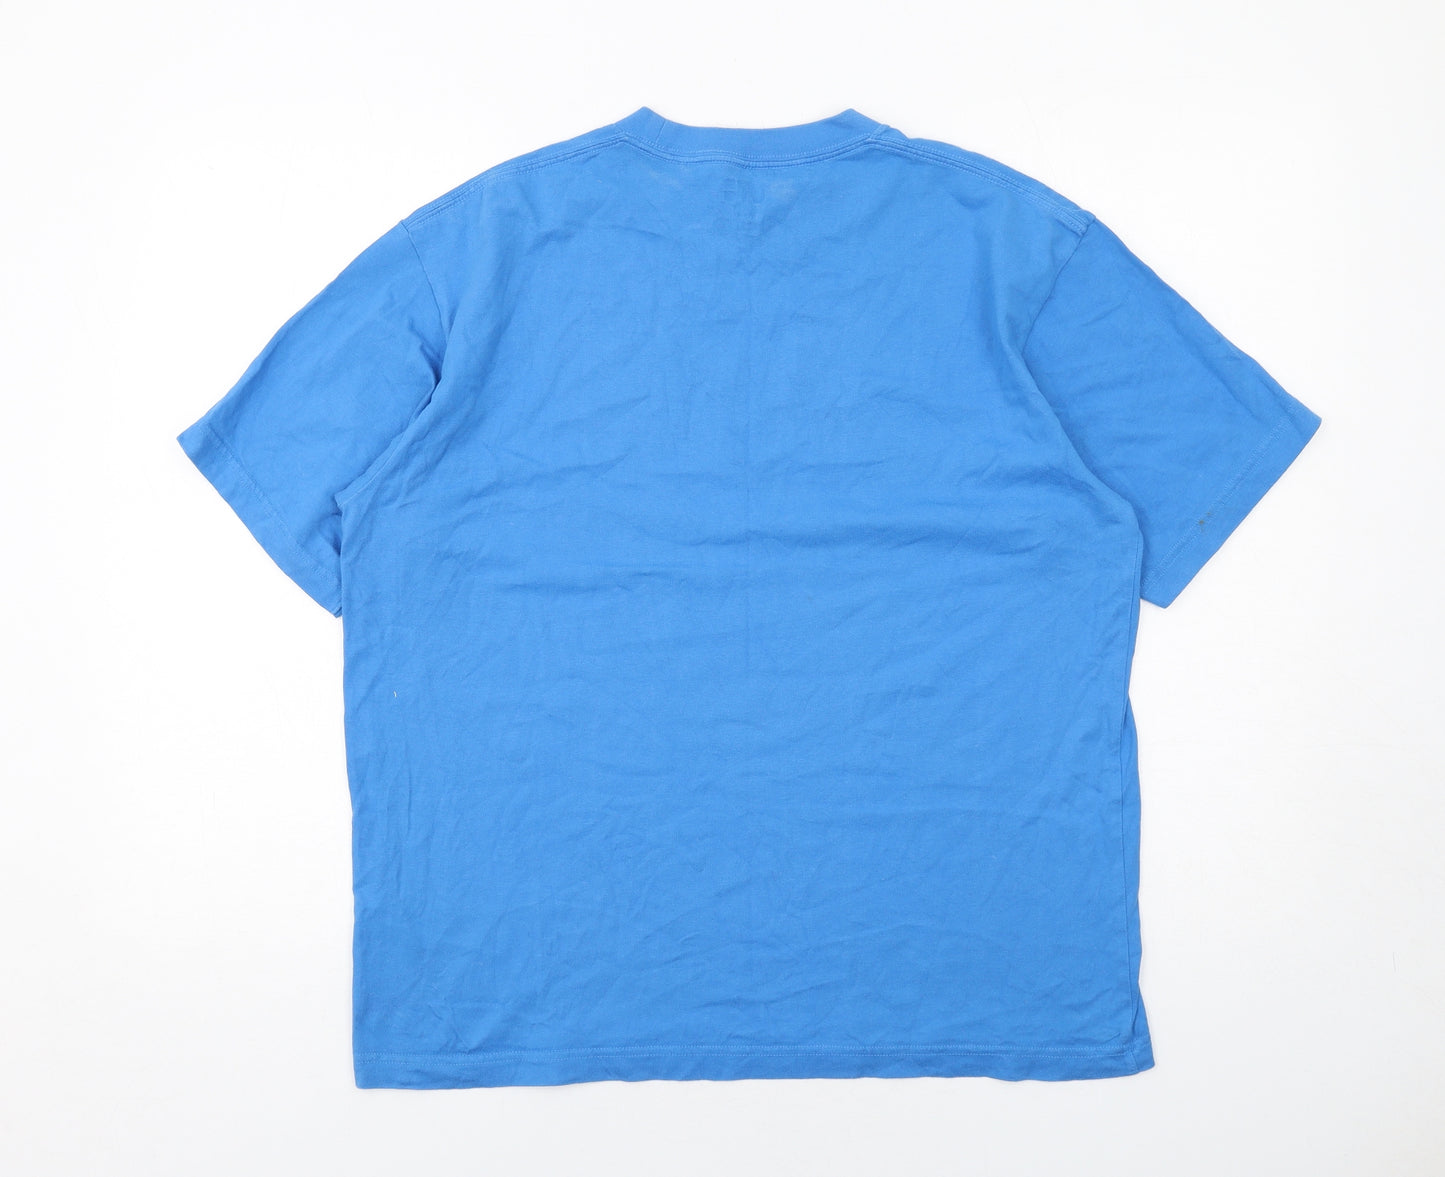 Uniqlo Womens Blue Cotton Basic T-Shirt Size S Round Neck - Billie Eilish